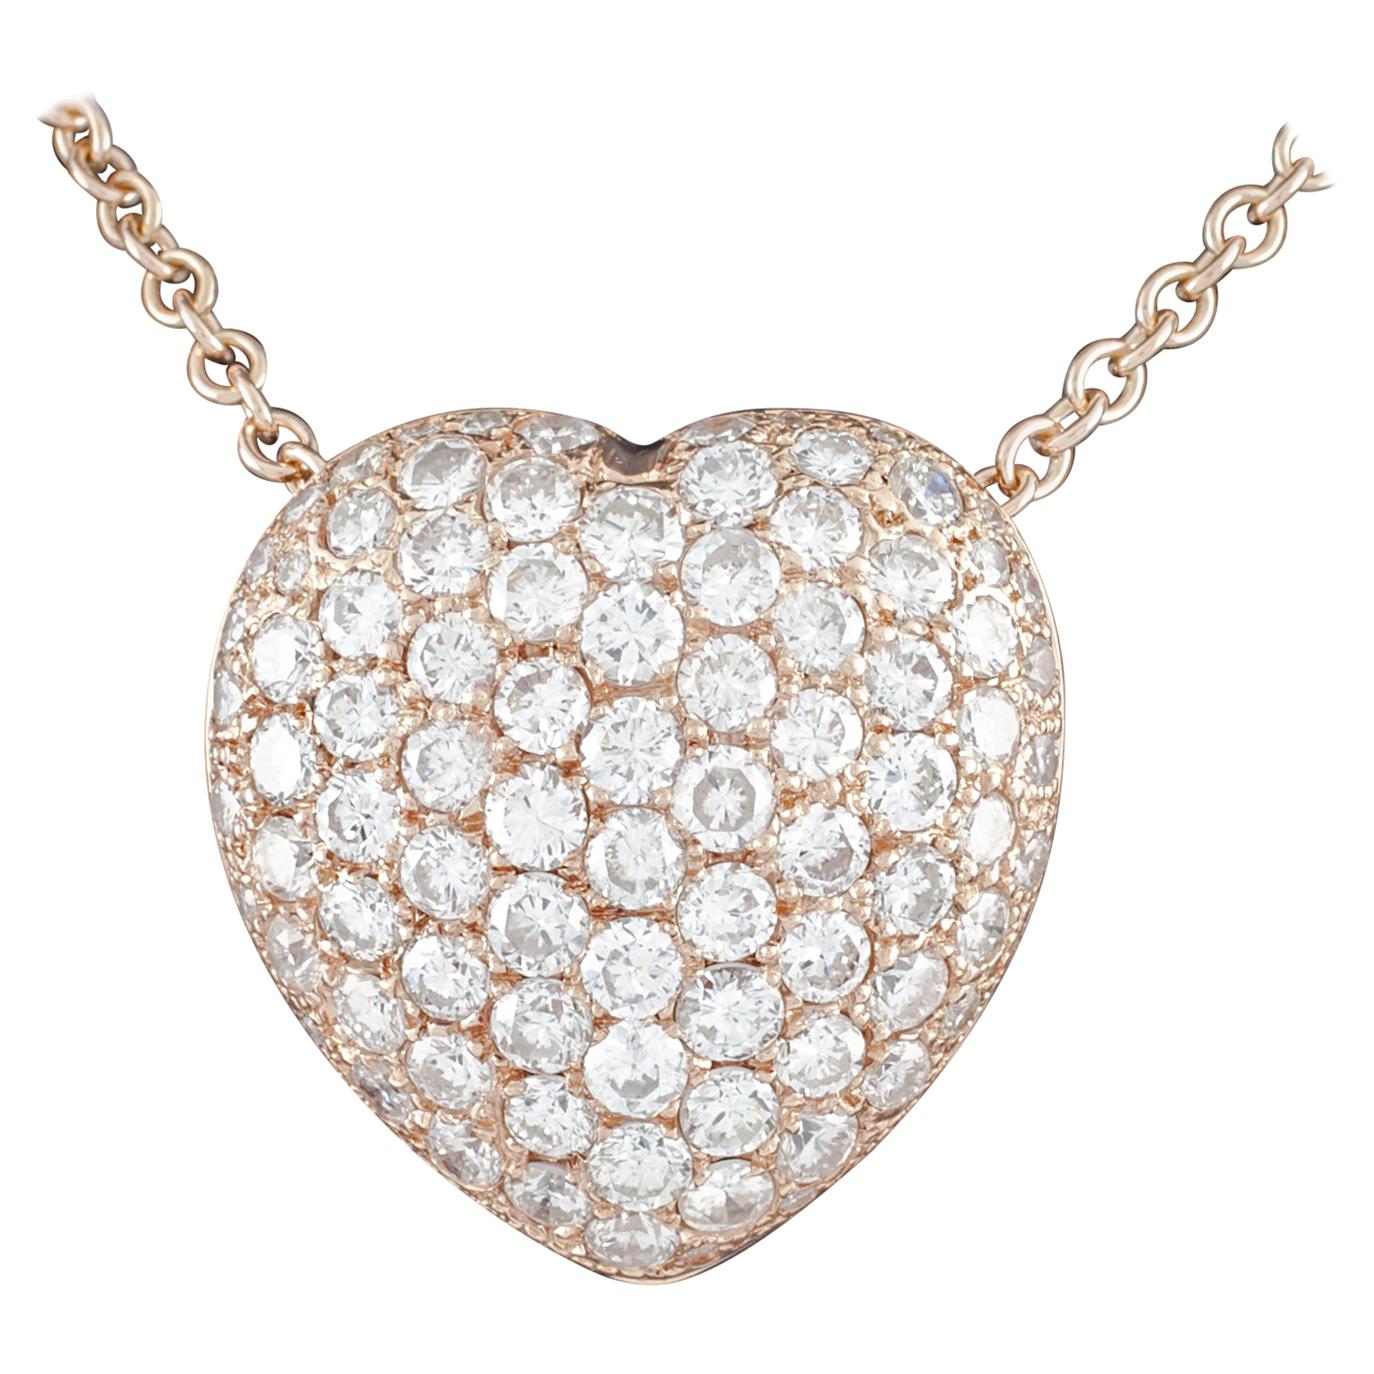 5.07 Carat Diamond Heart 14 Karat Rose Gold Pave Pendant Necklace with Chain